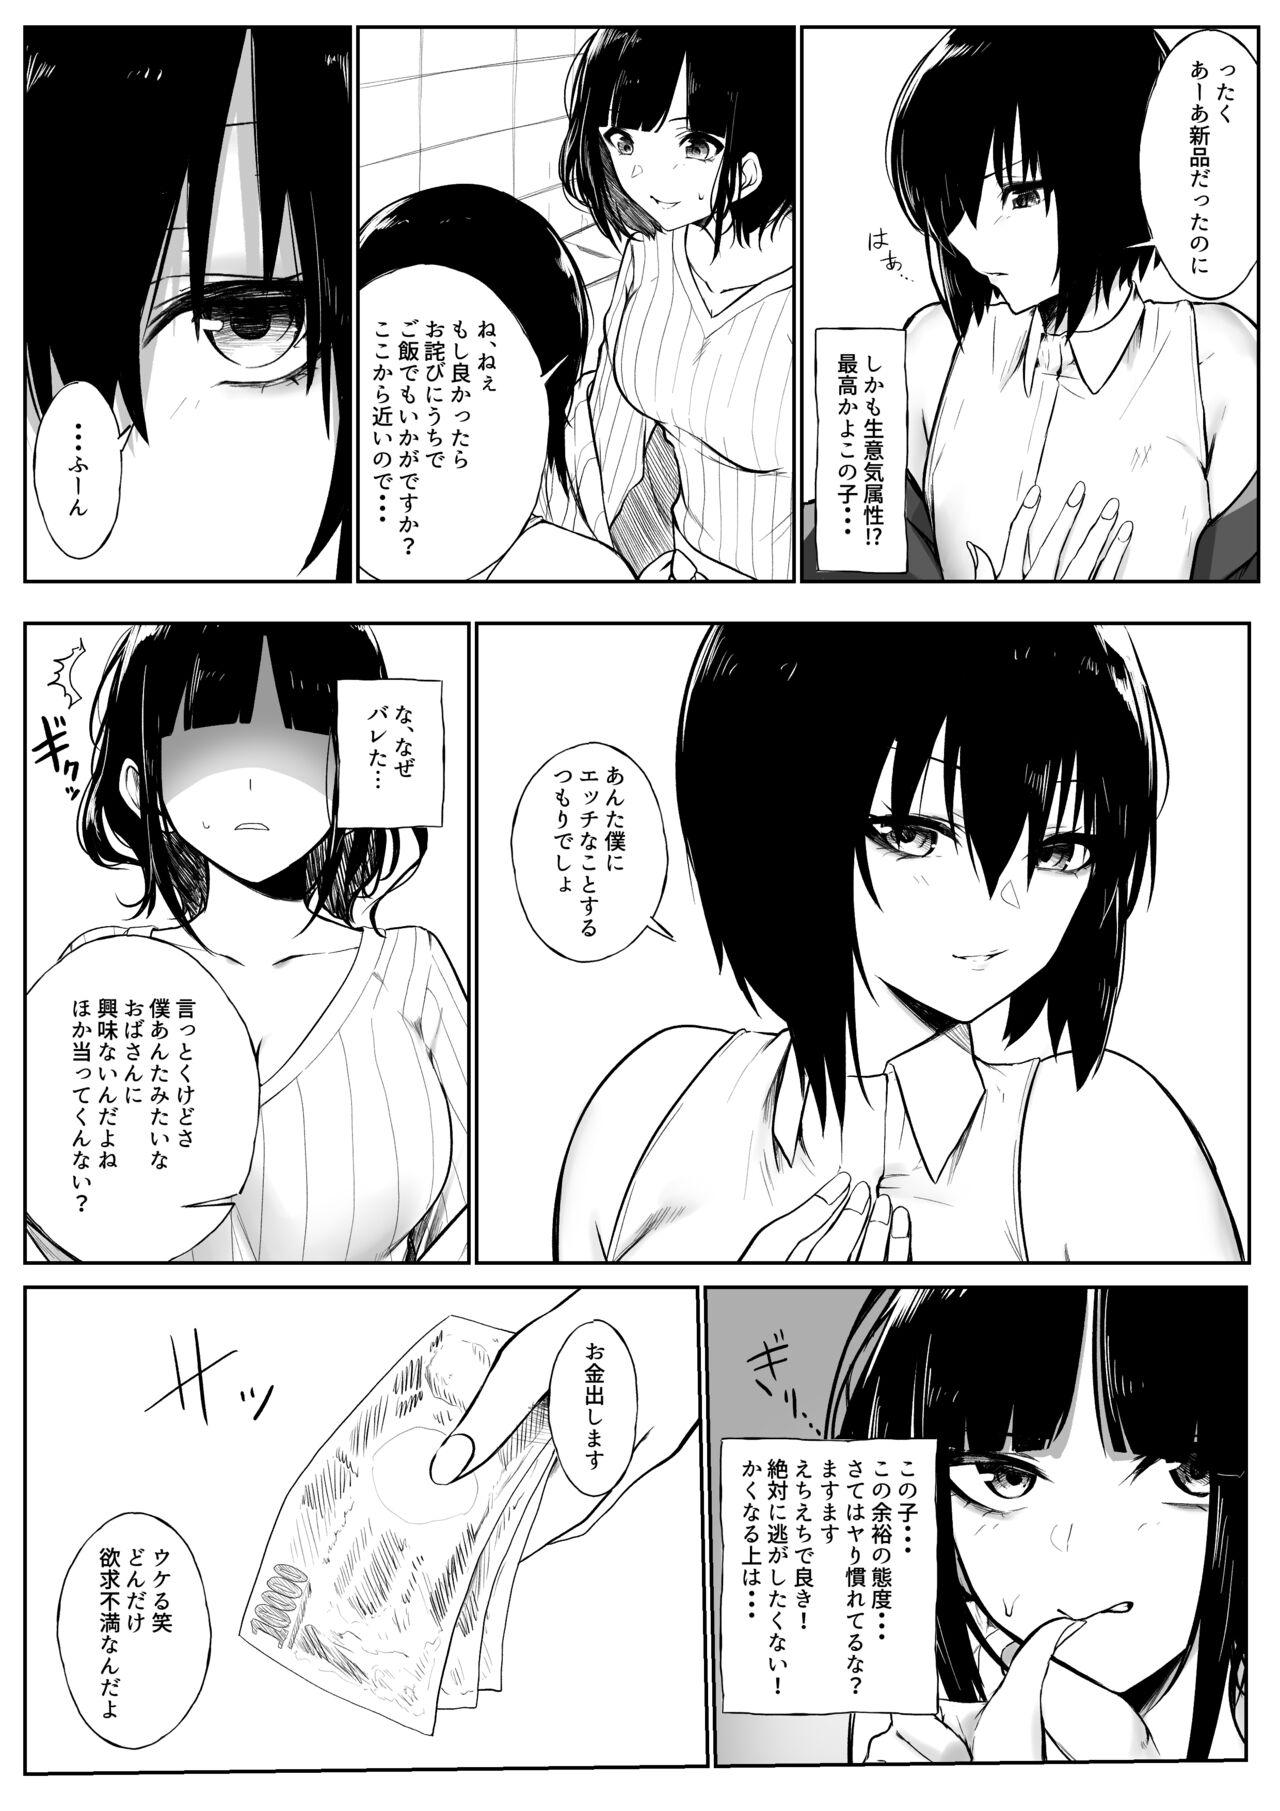 Prostituta Shota ga utk Onee-san ni Taberarechau Hanashi - Nijisanji Sharing - Page 2